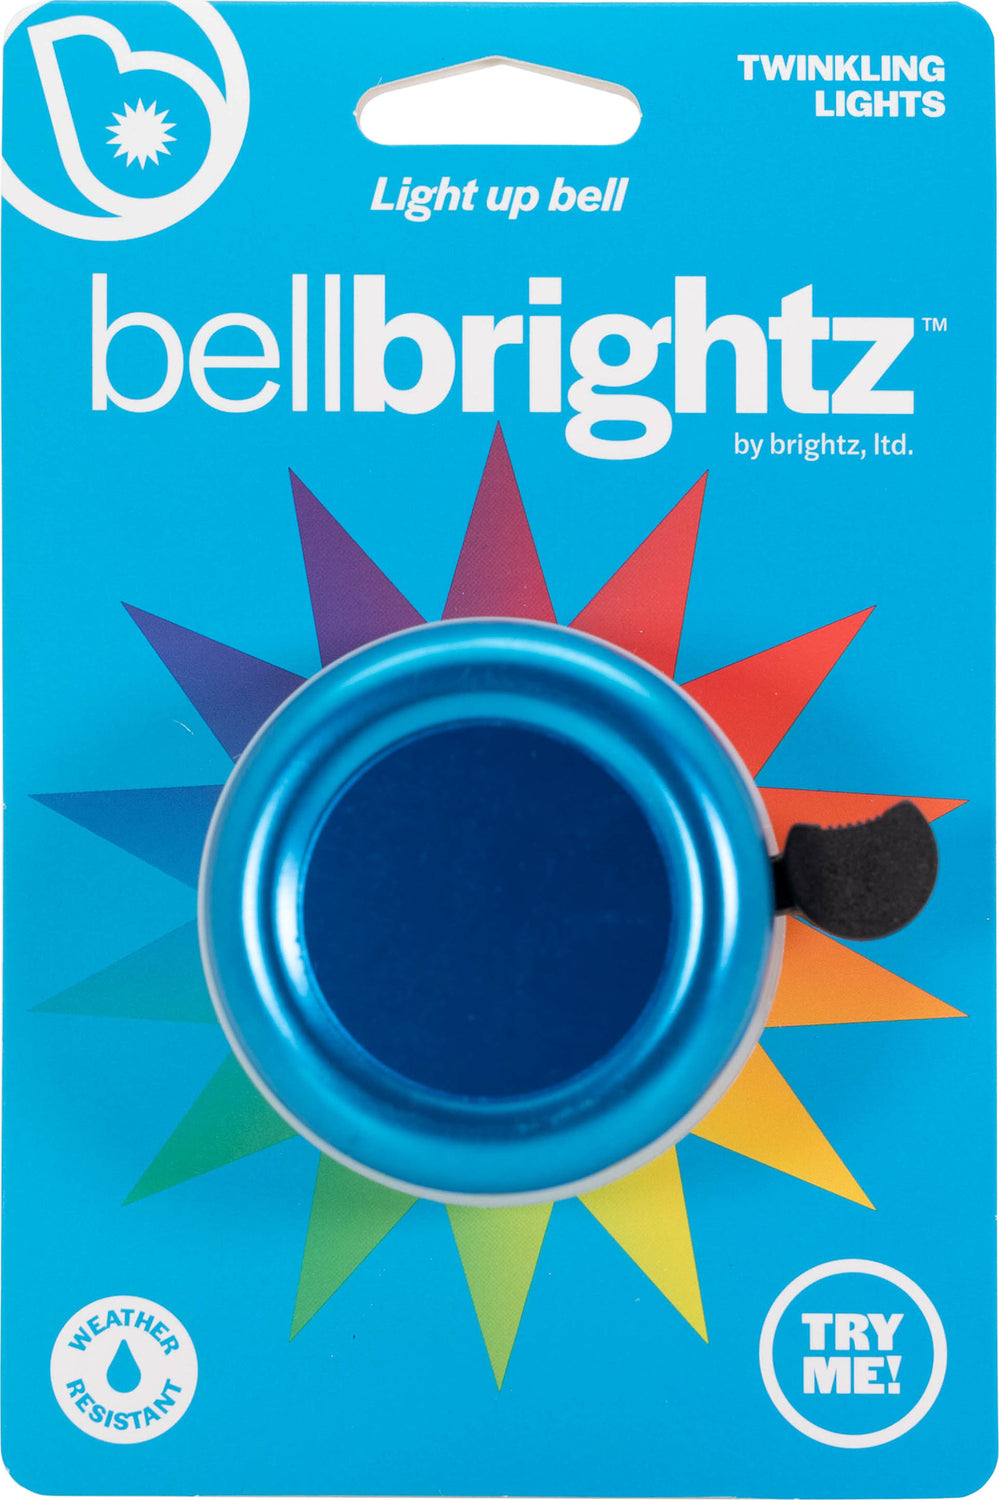 Bell Brightz